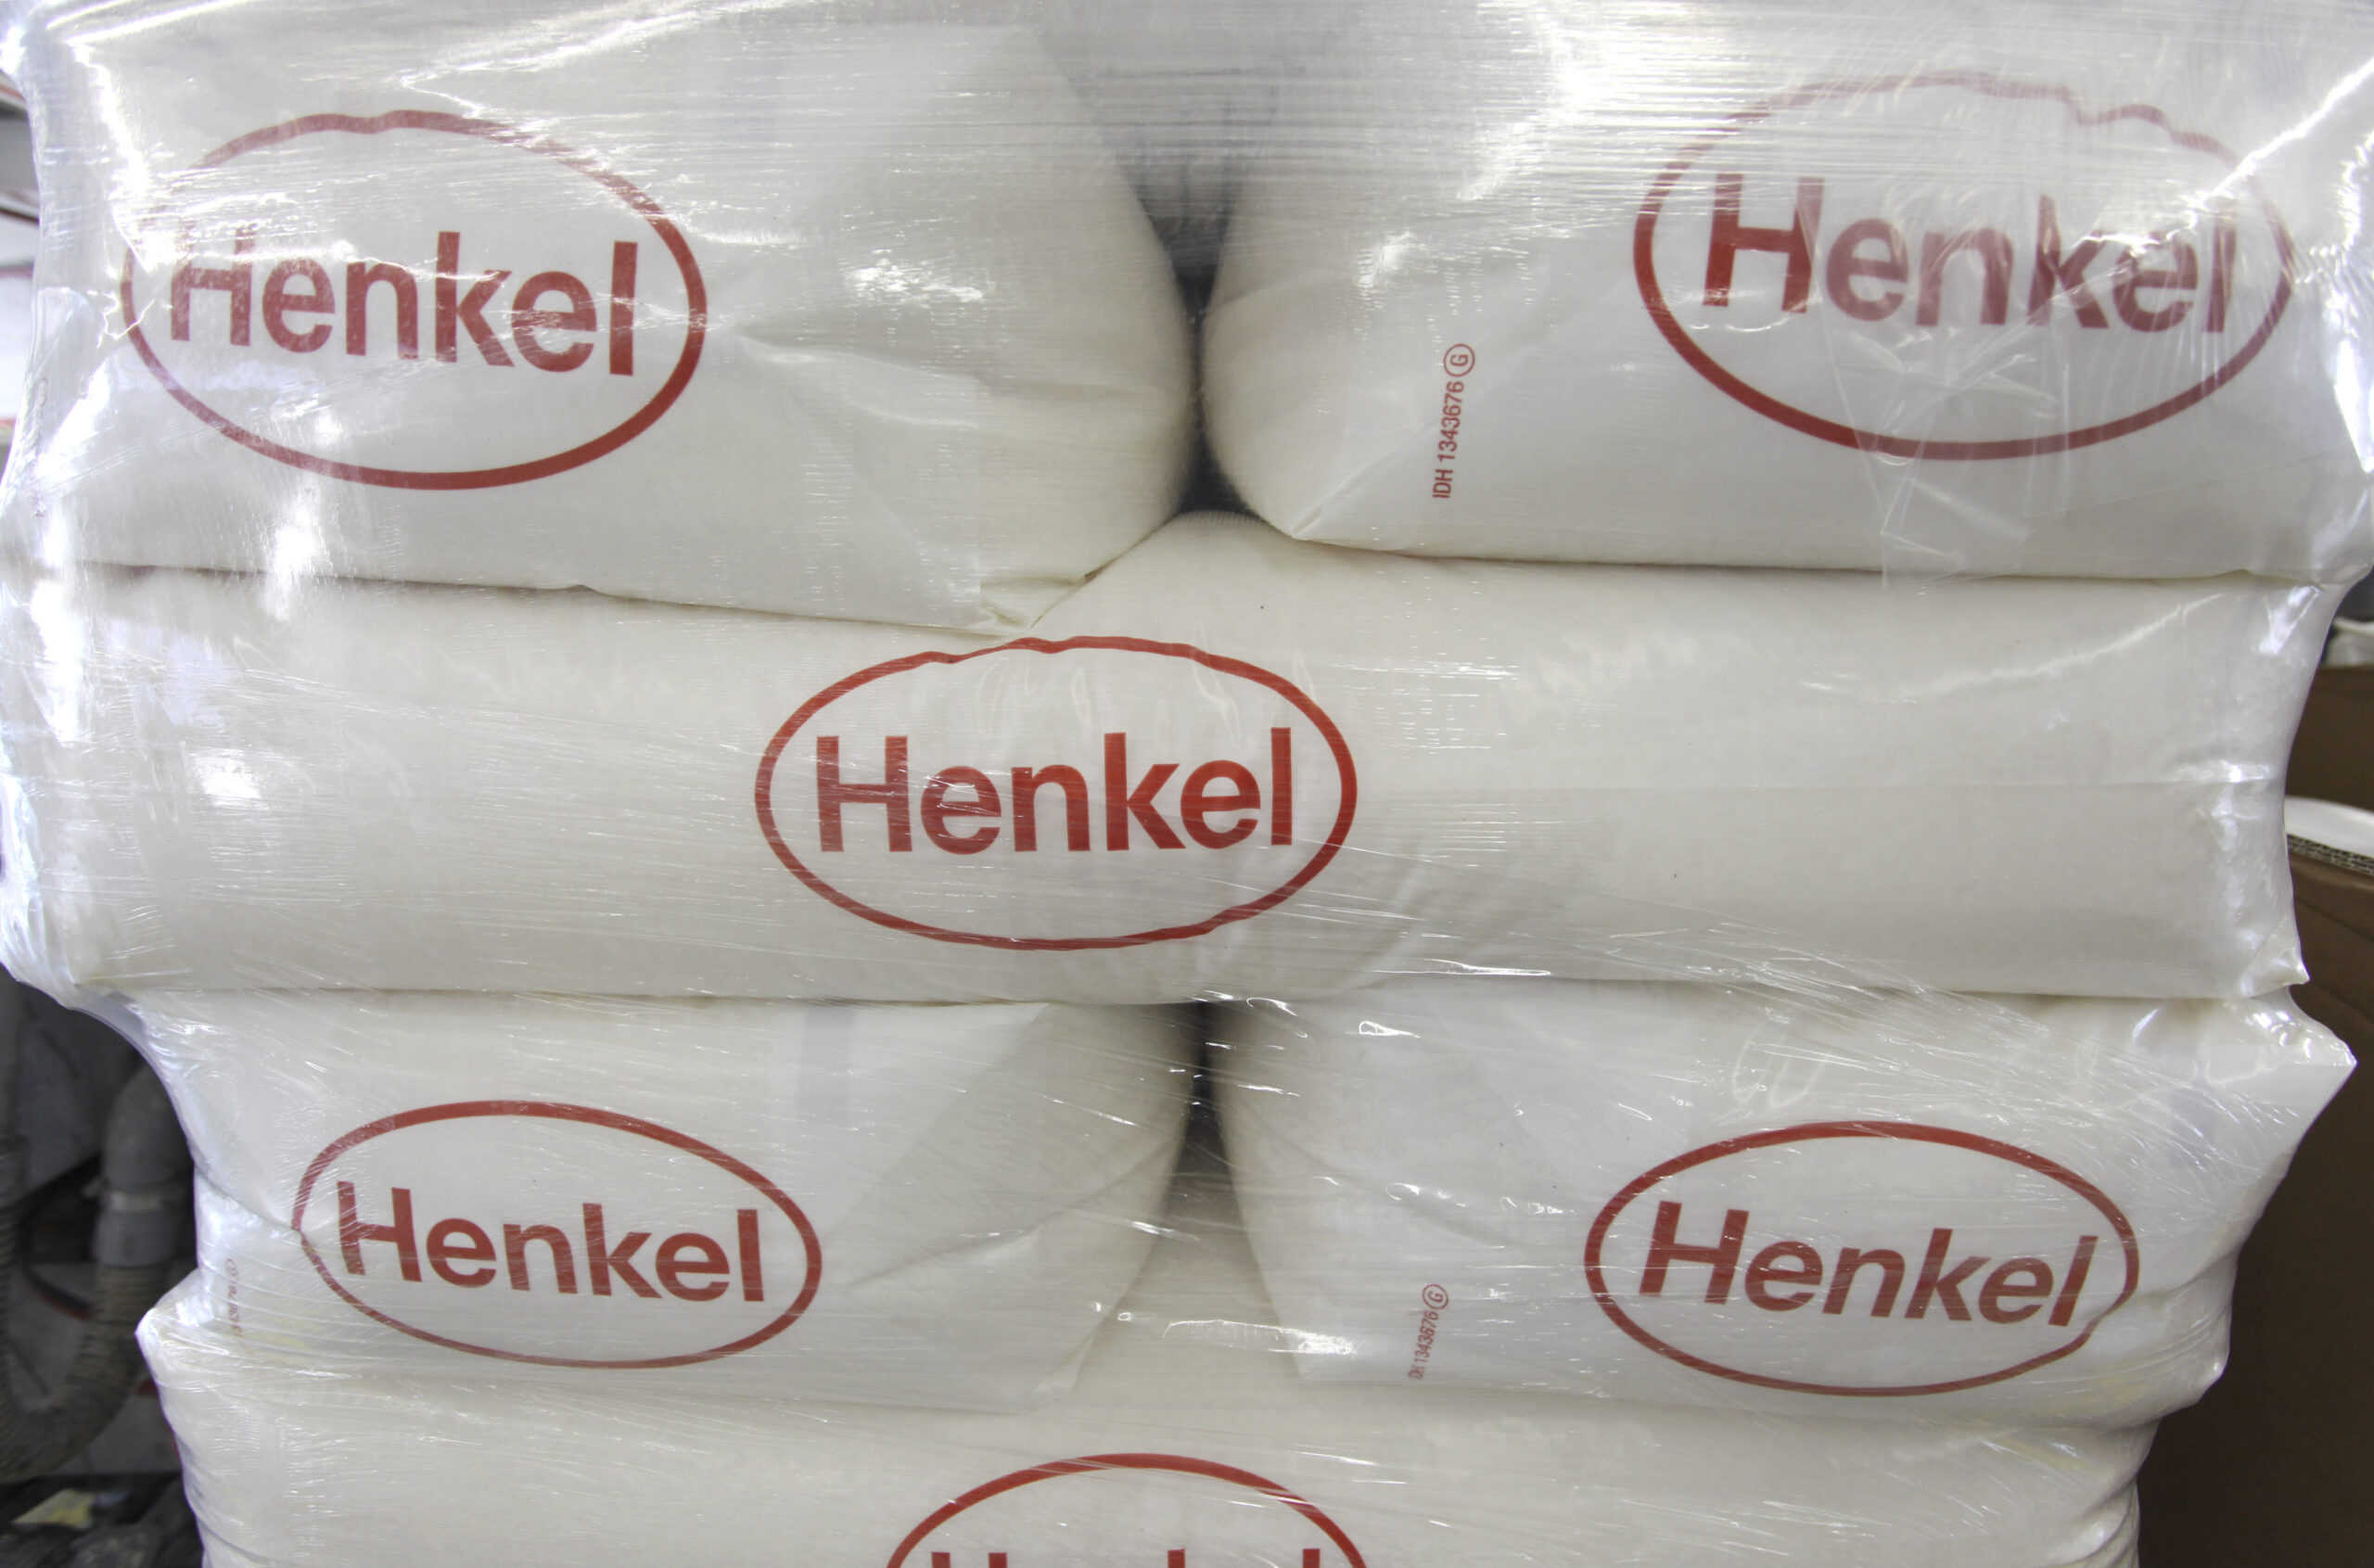 Henkel produces multiple brands of laundry detergent